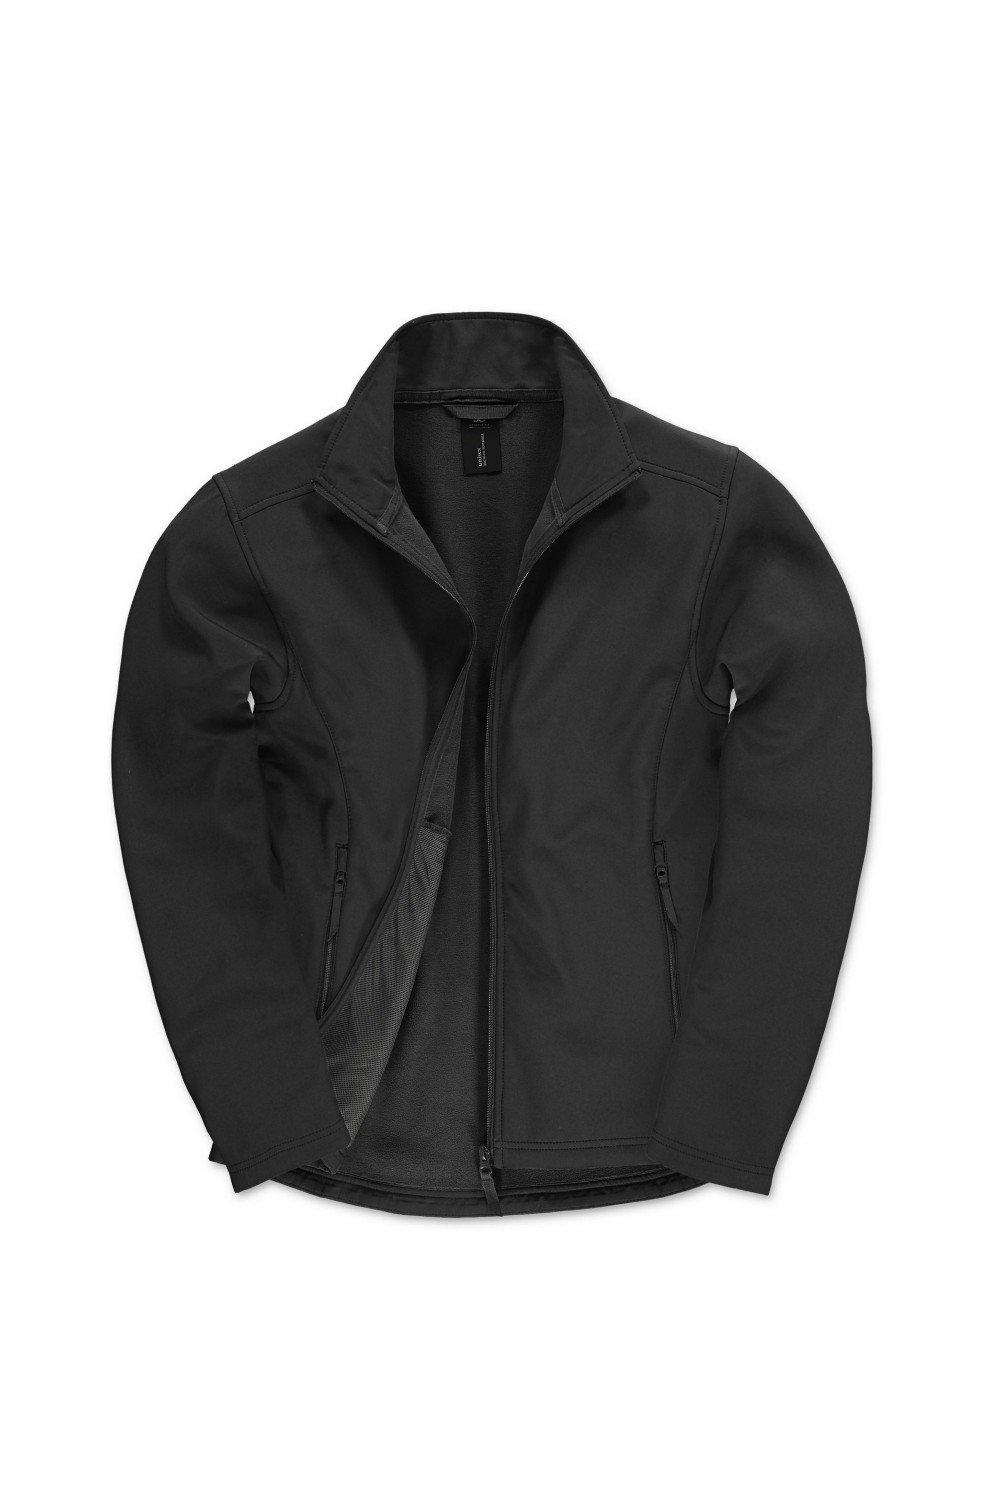 ID.701 Куртка Soft Shell B&C, черный